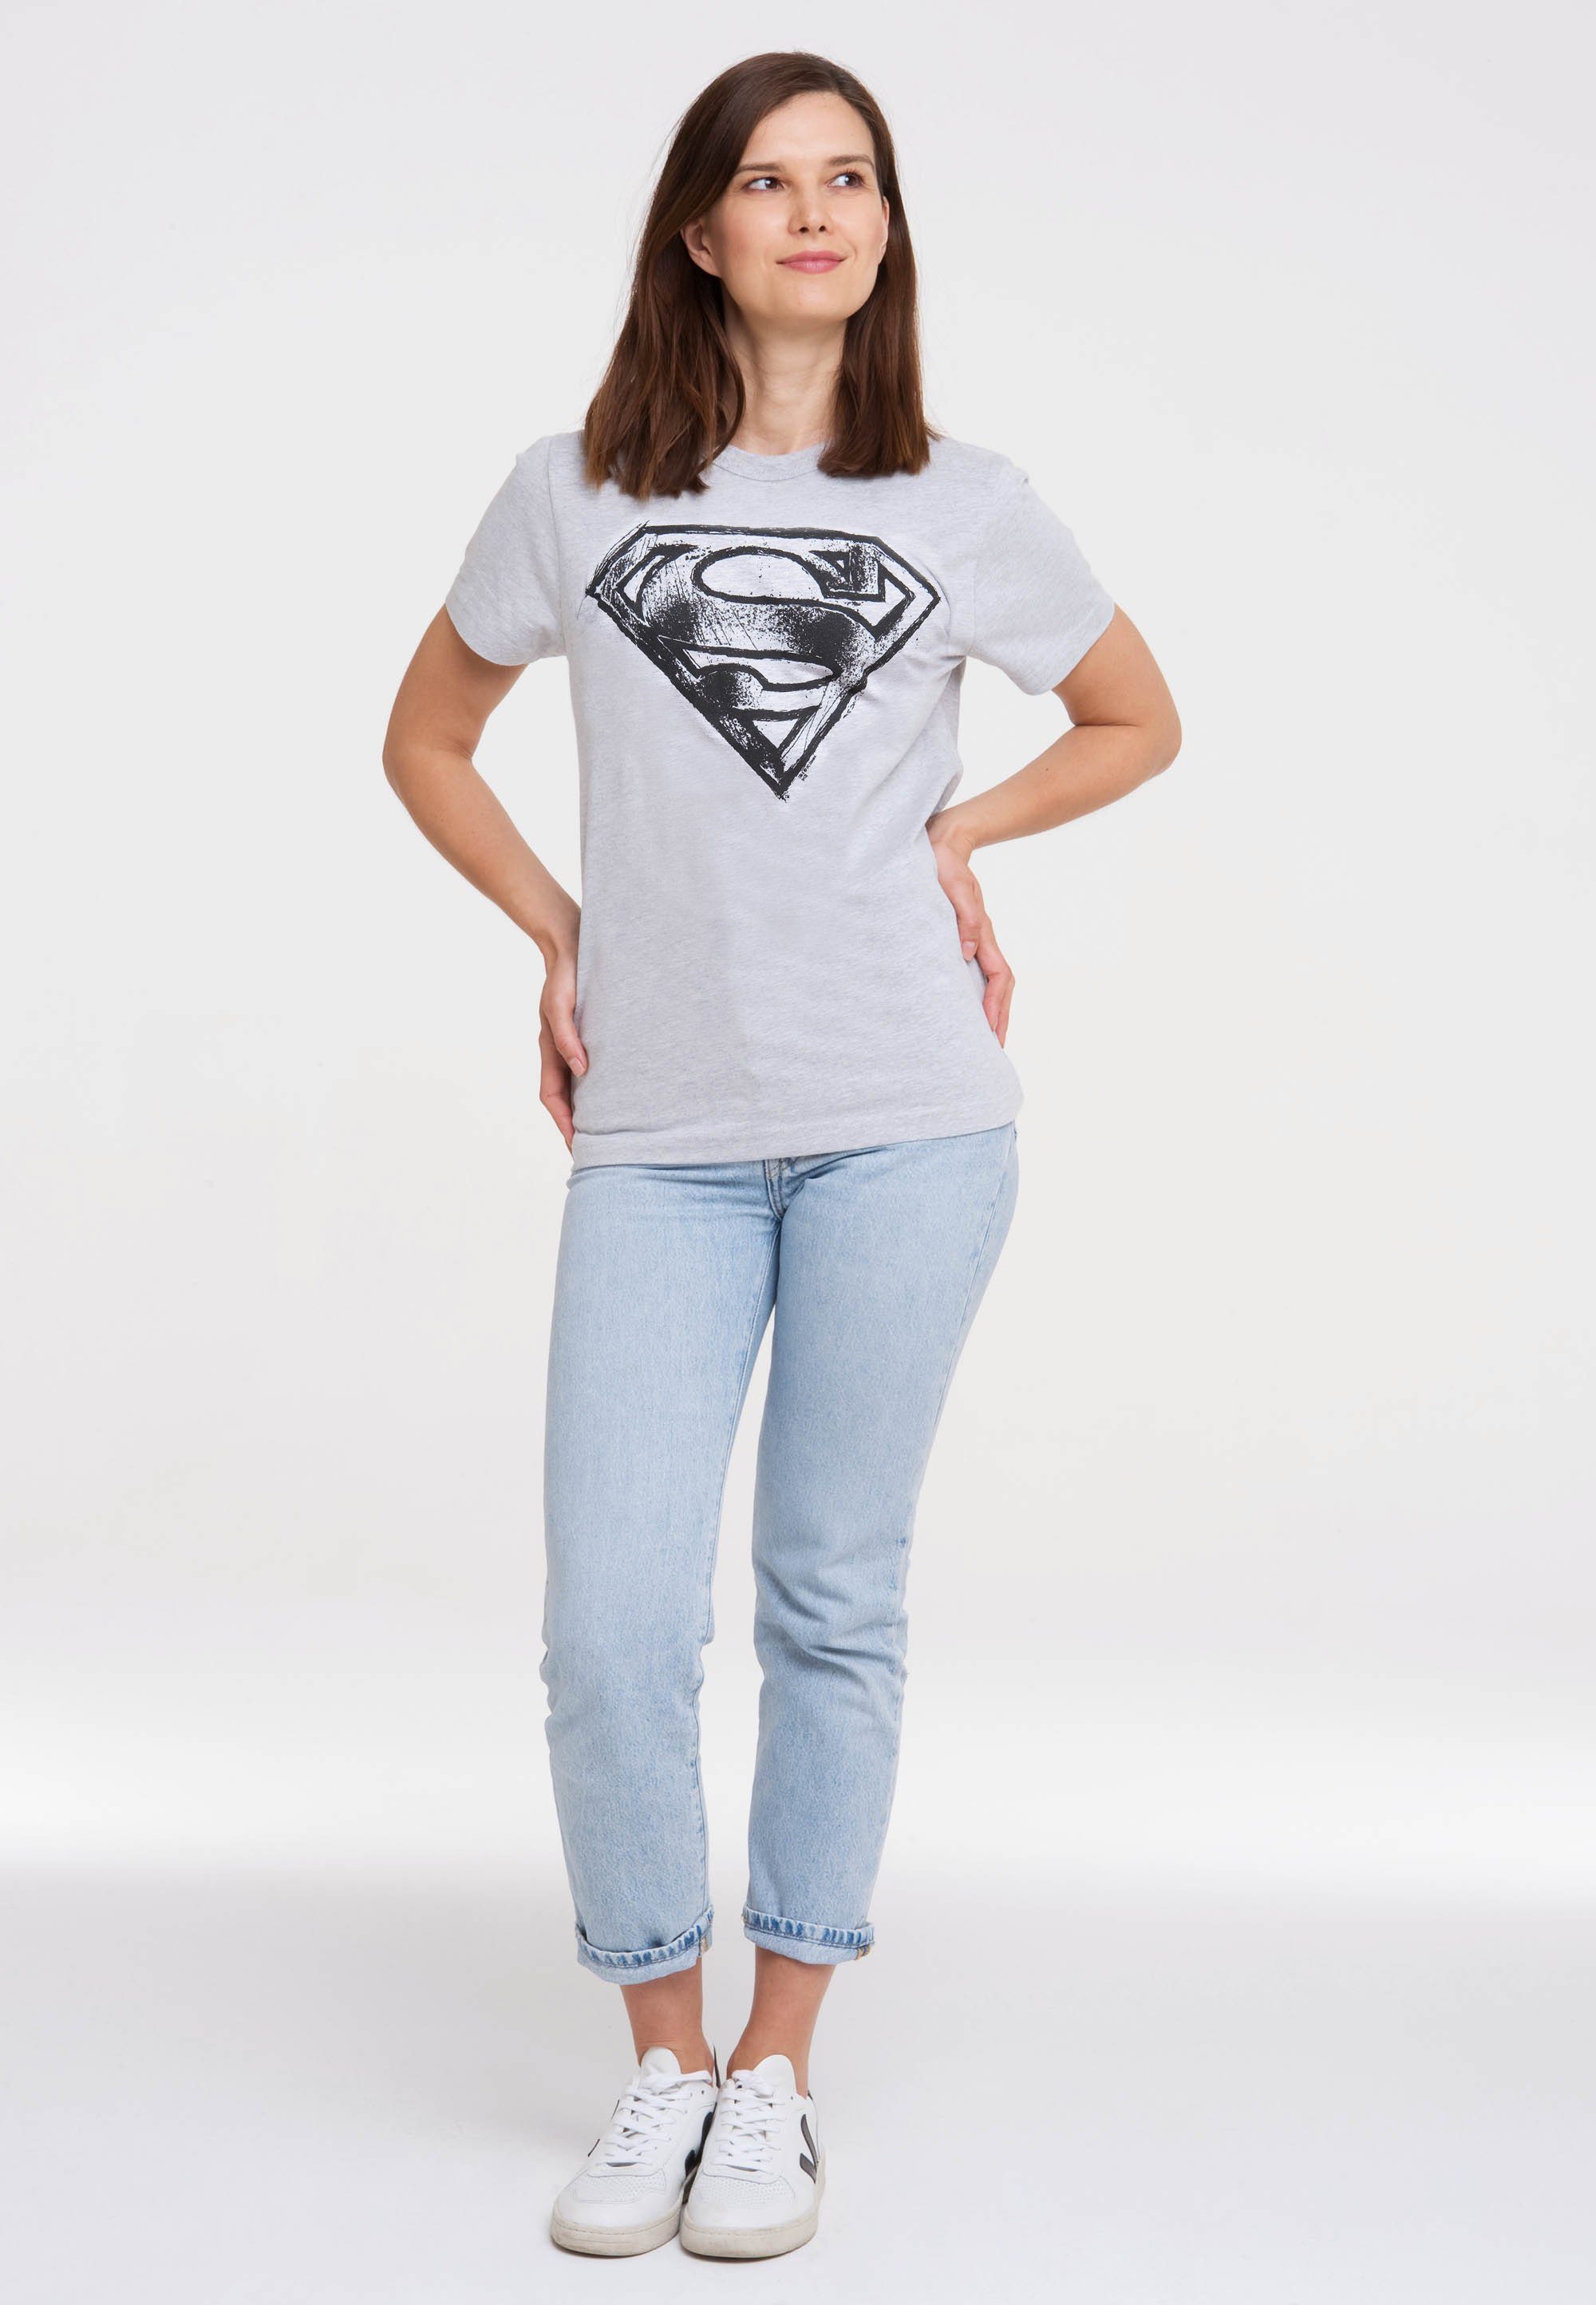 LOGOSHIRT T-Shirt Superman Scribble Logo trendigem Superhelden-Print mit